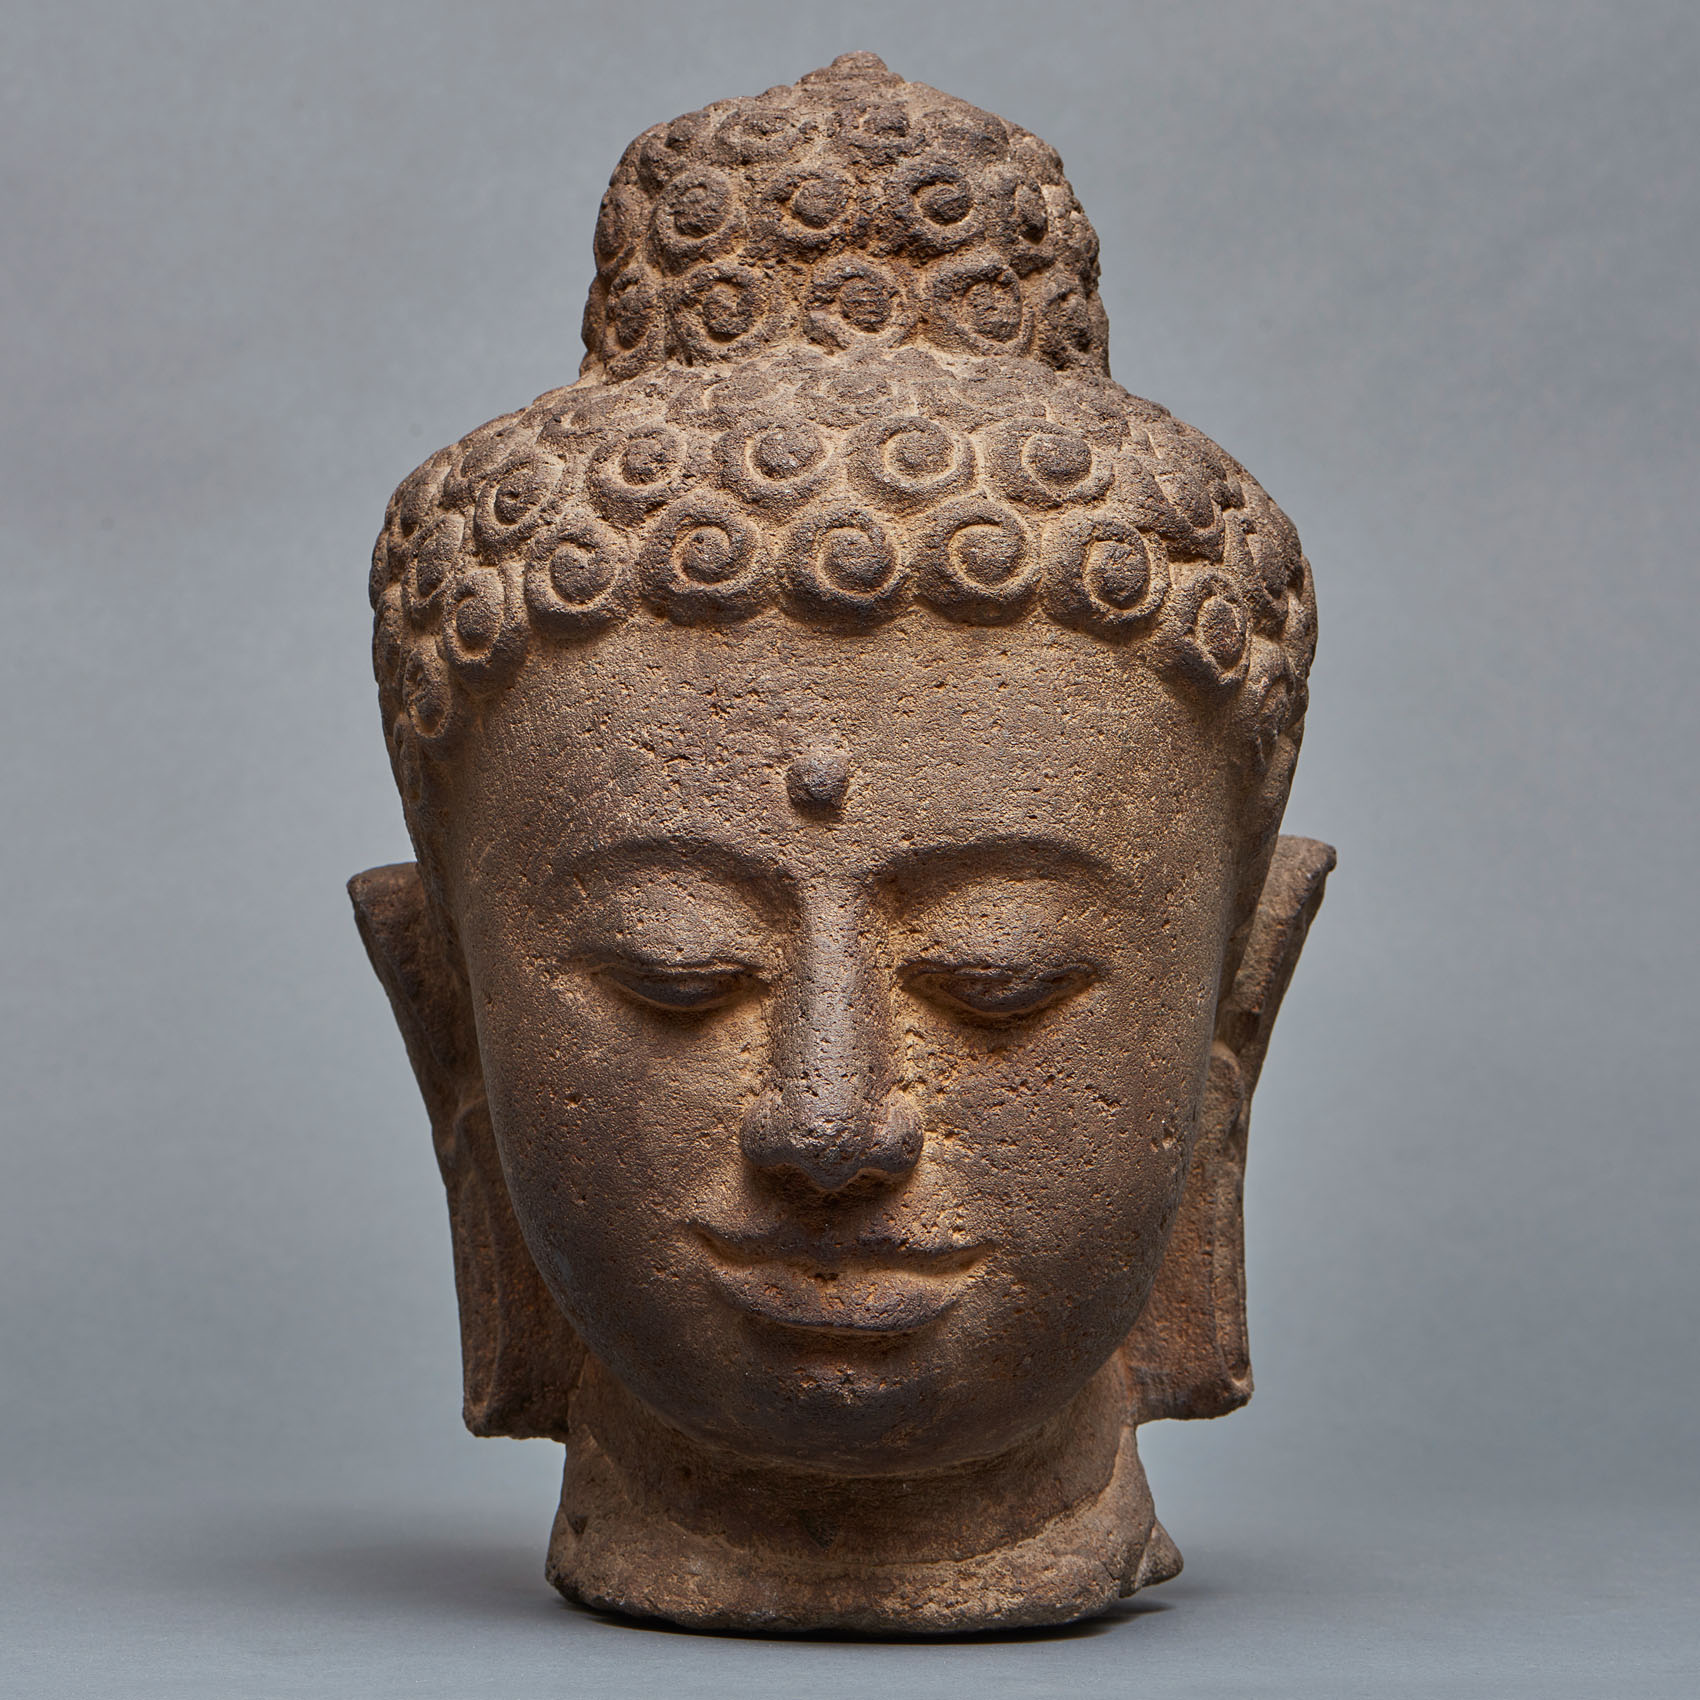 Stone head of a Buddha – Van Hier tot Tokio